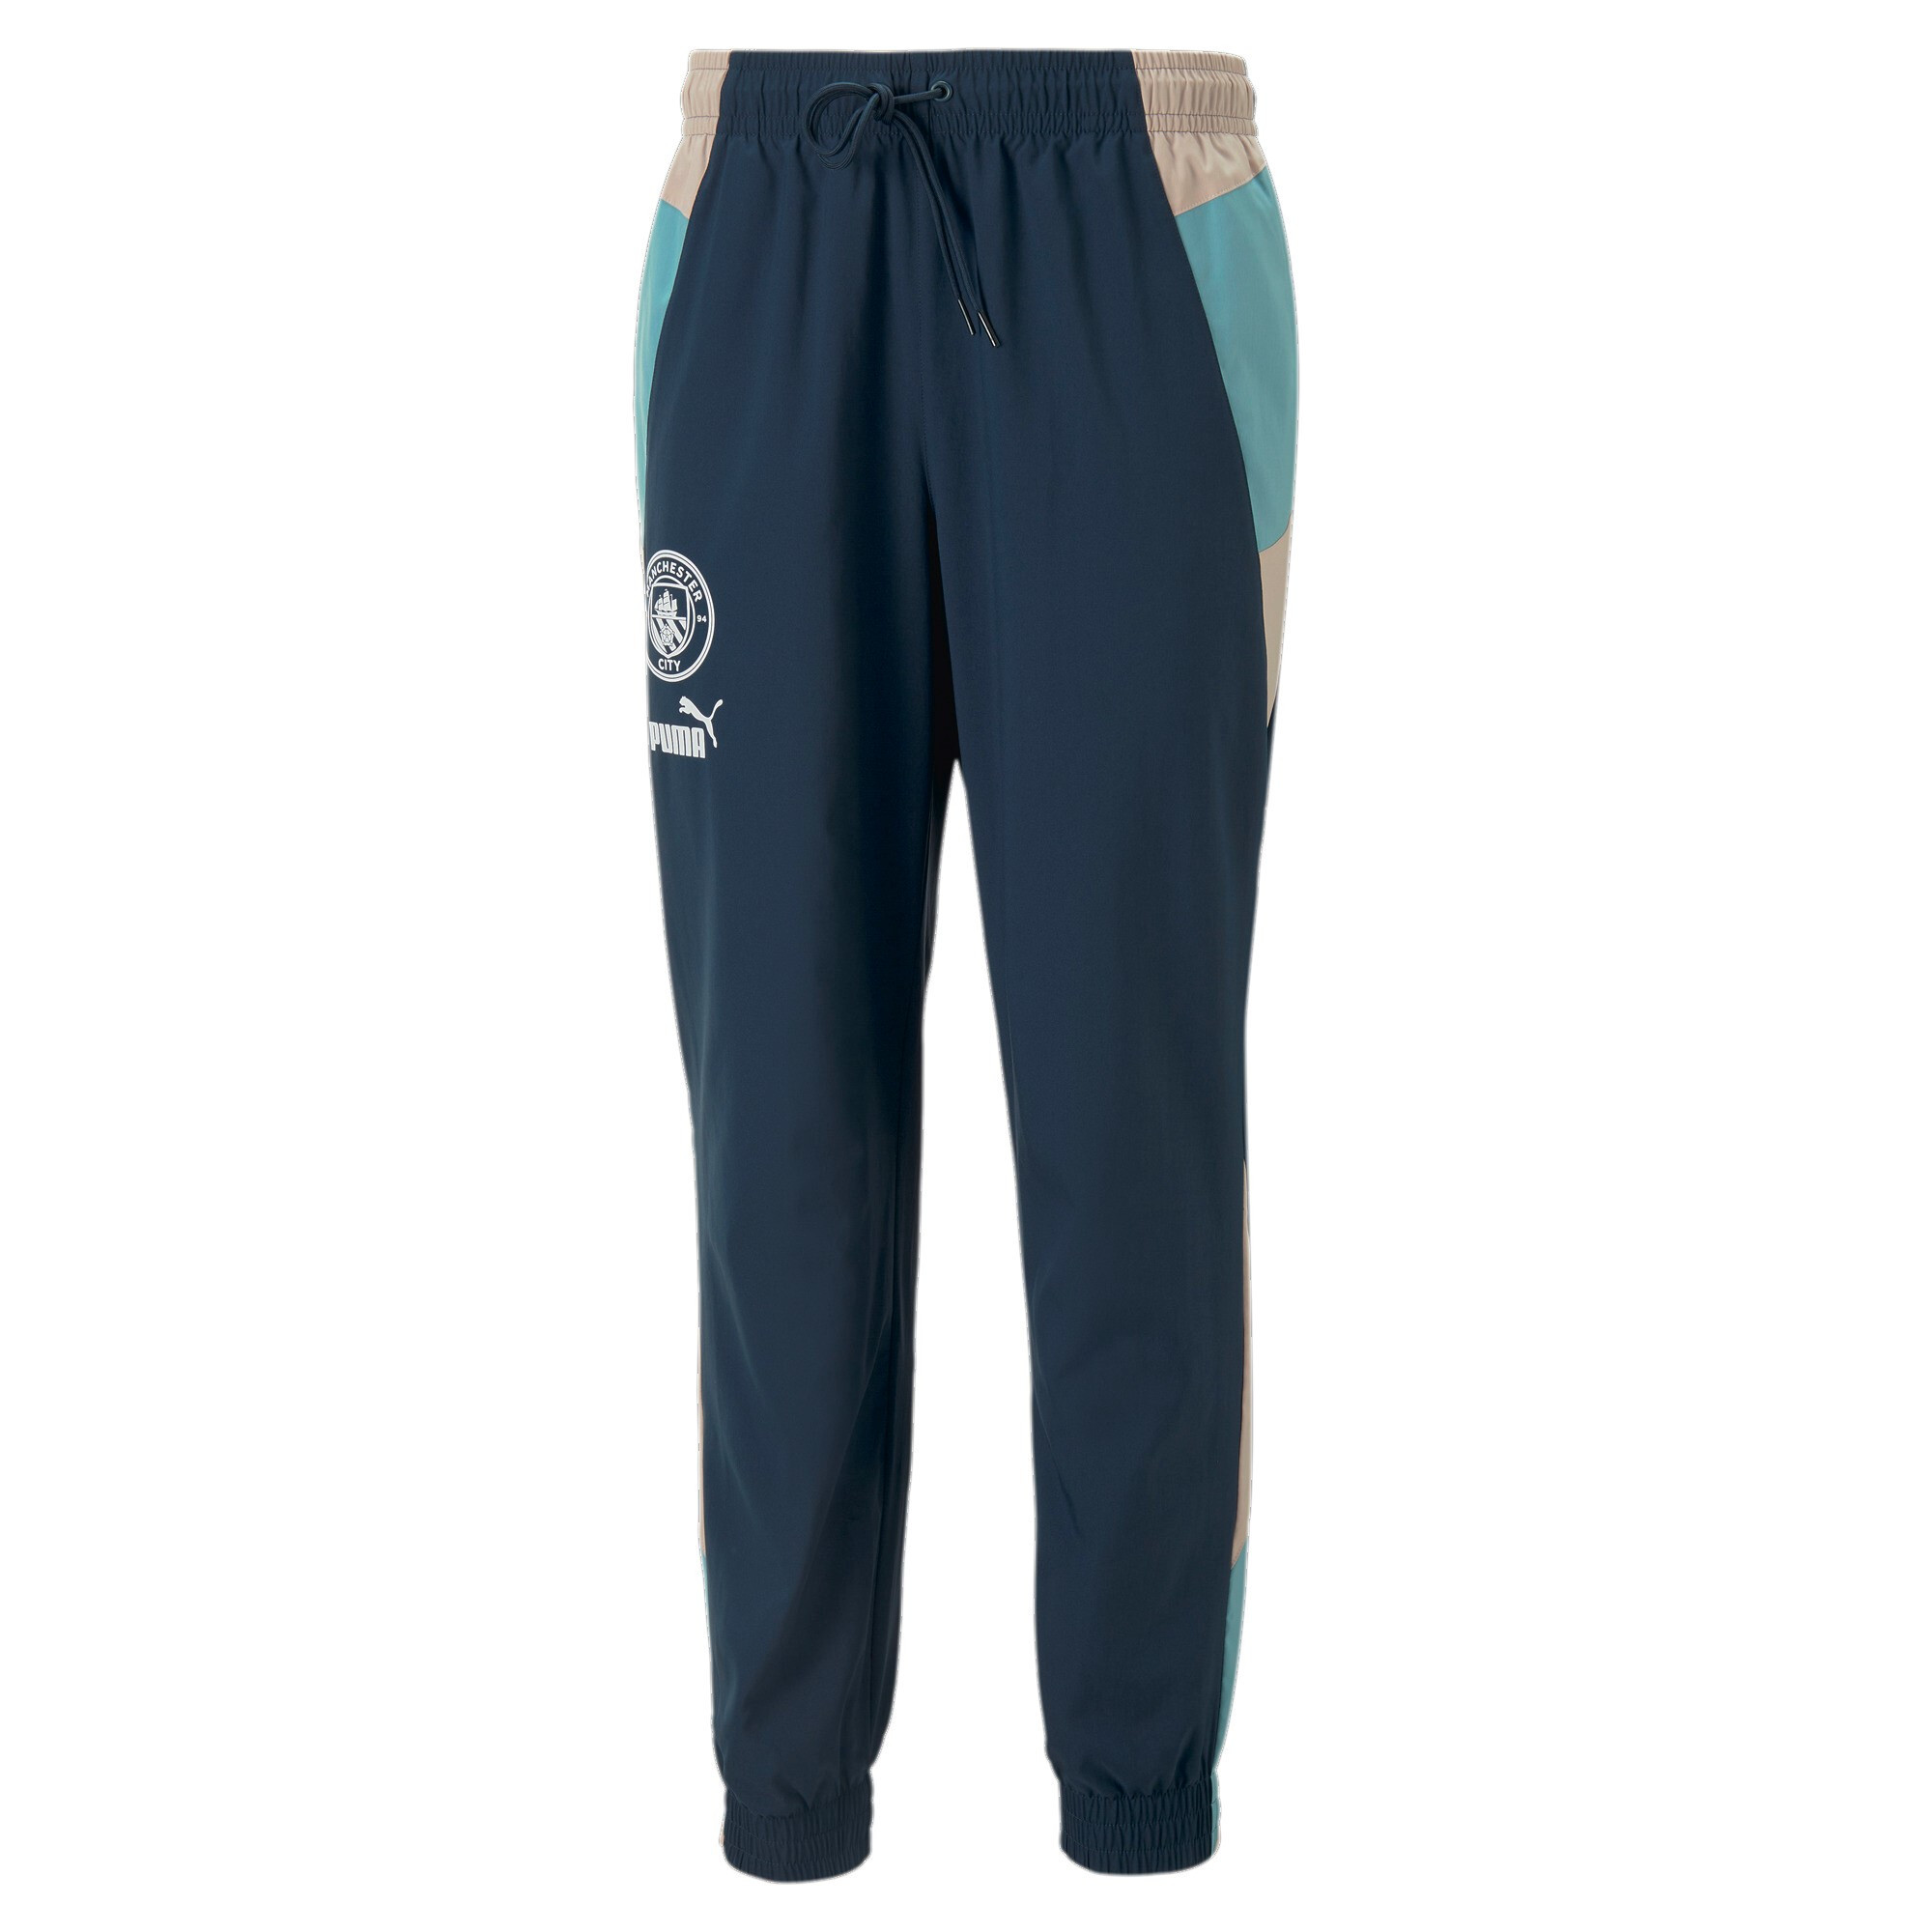 Puma Manchester City FC Men's Woven football track pants - Navy Blue/Rose Quartz